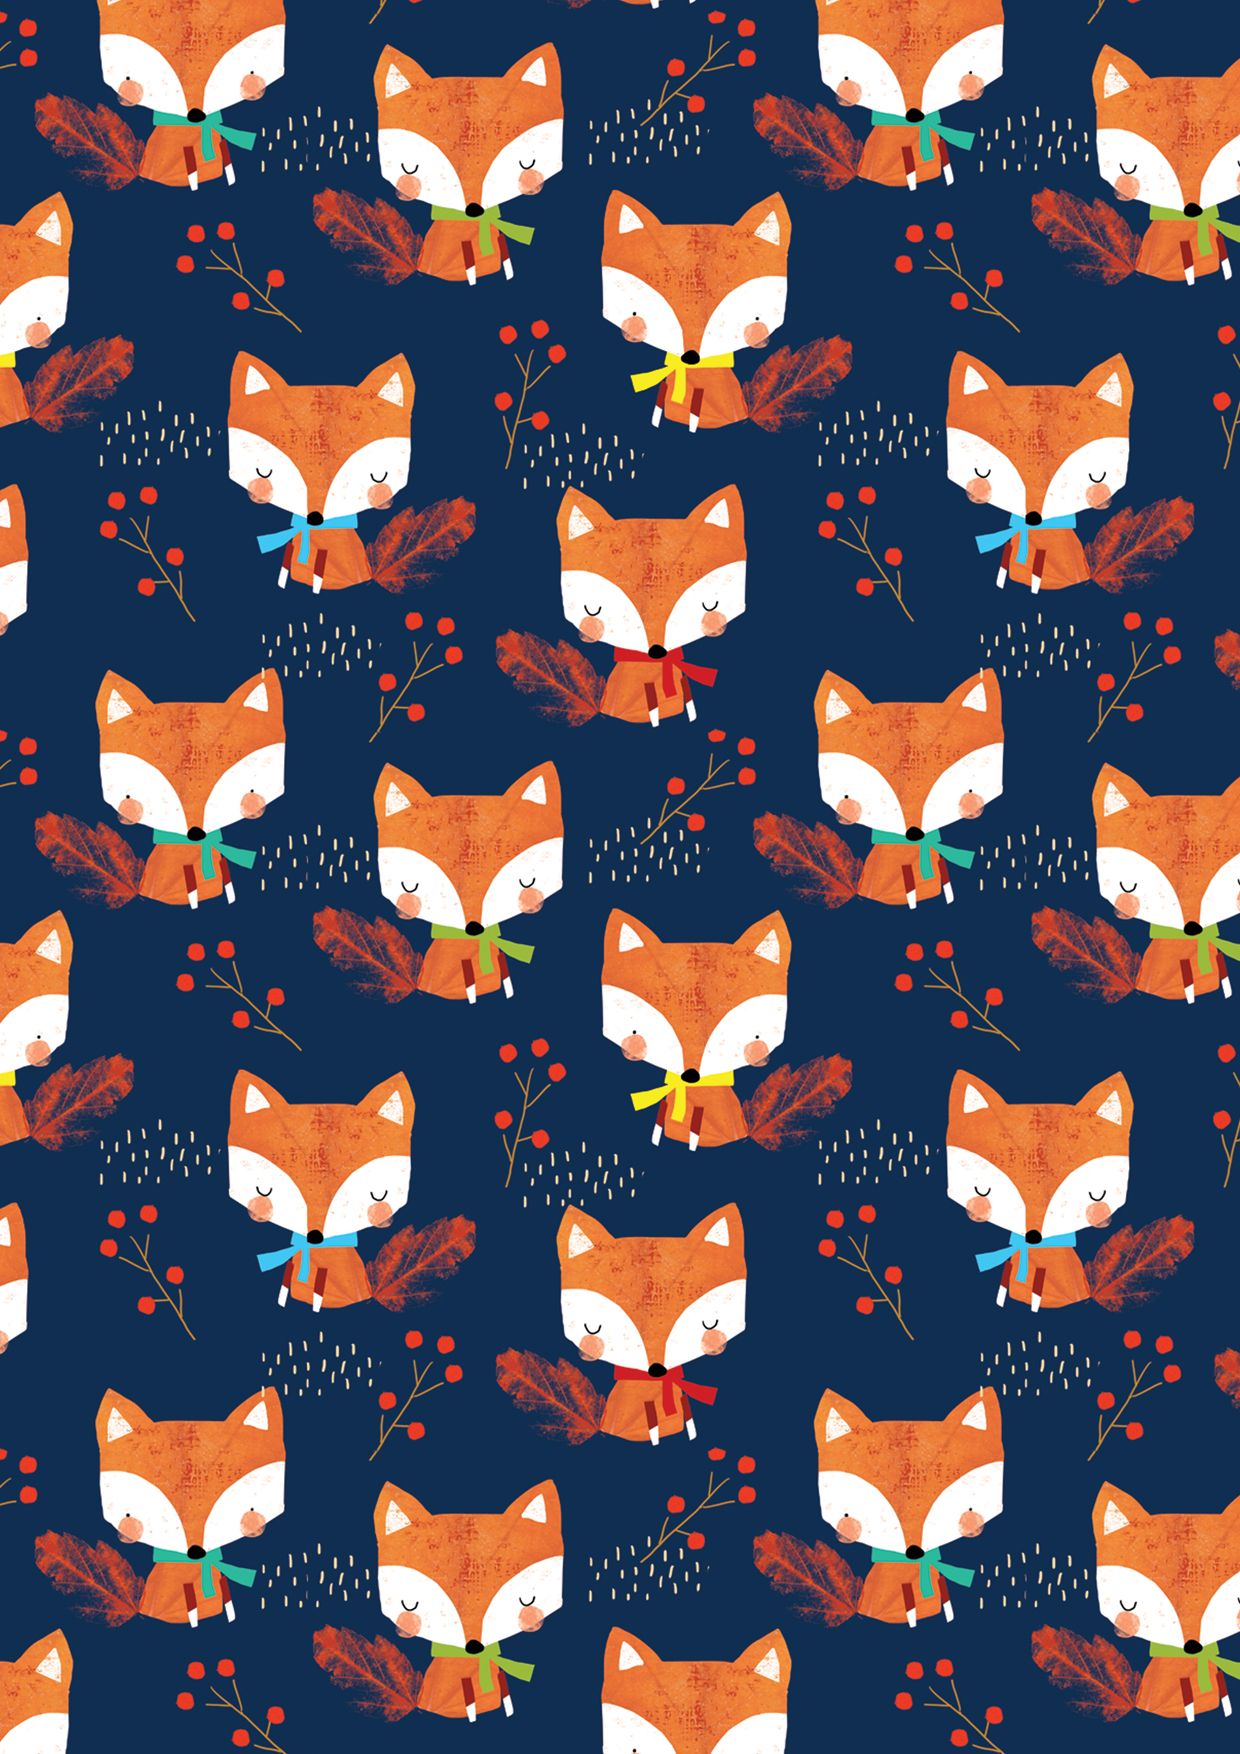 alex willmore alternative version of autumn fox pattern